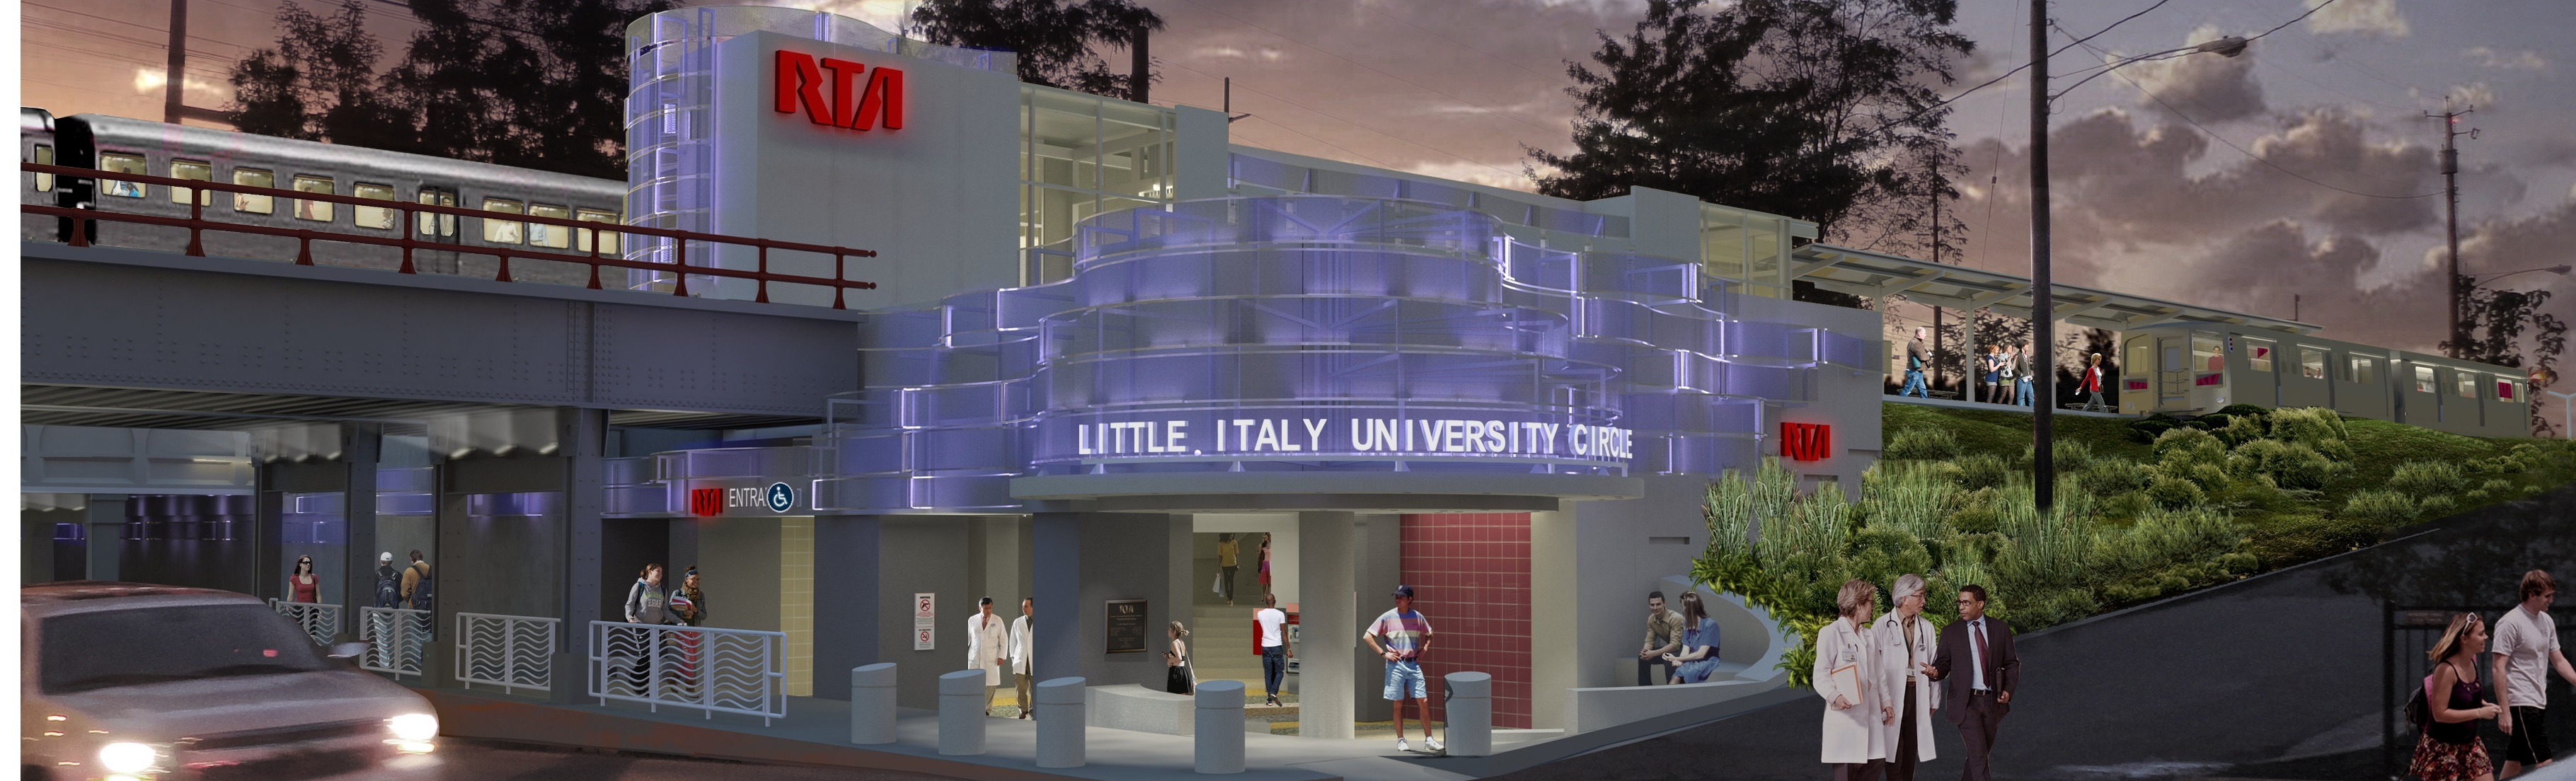  Little Italy - University Circle Rapid Station